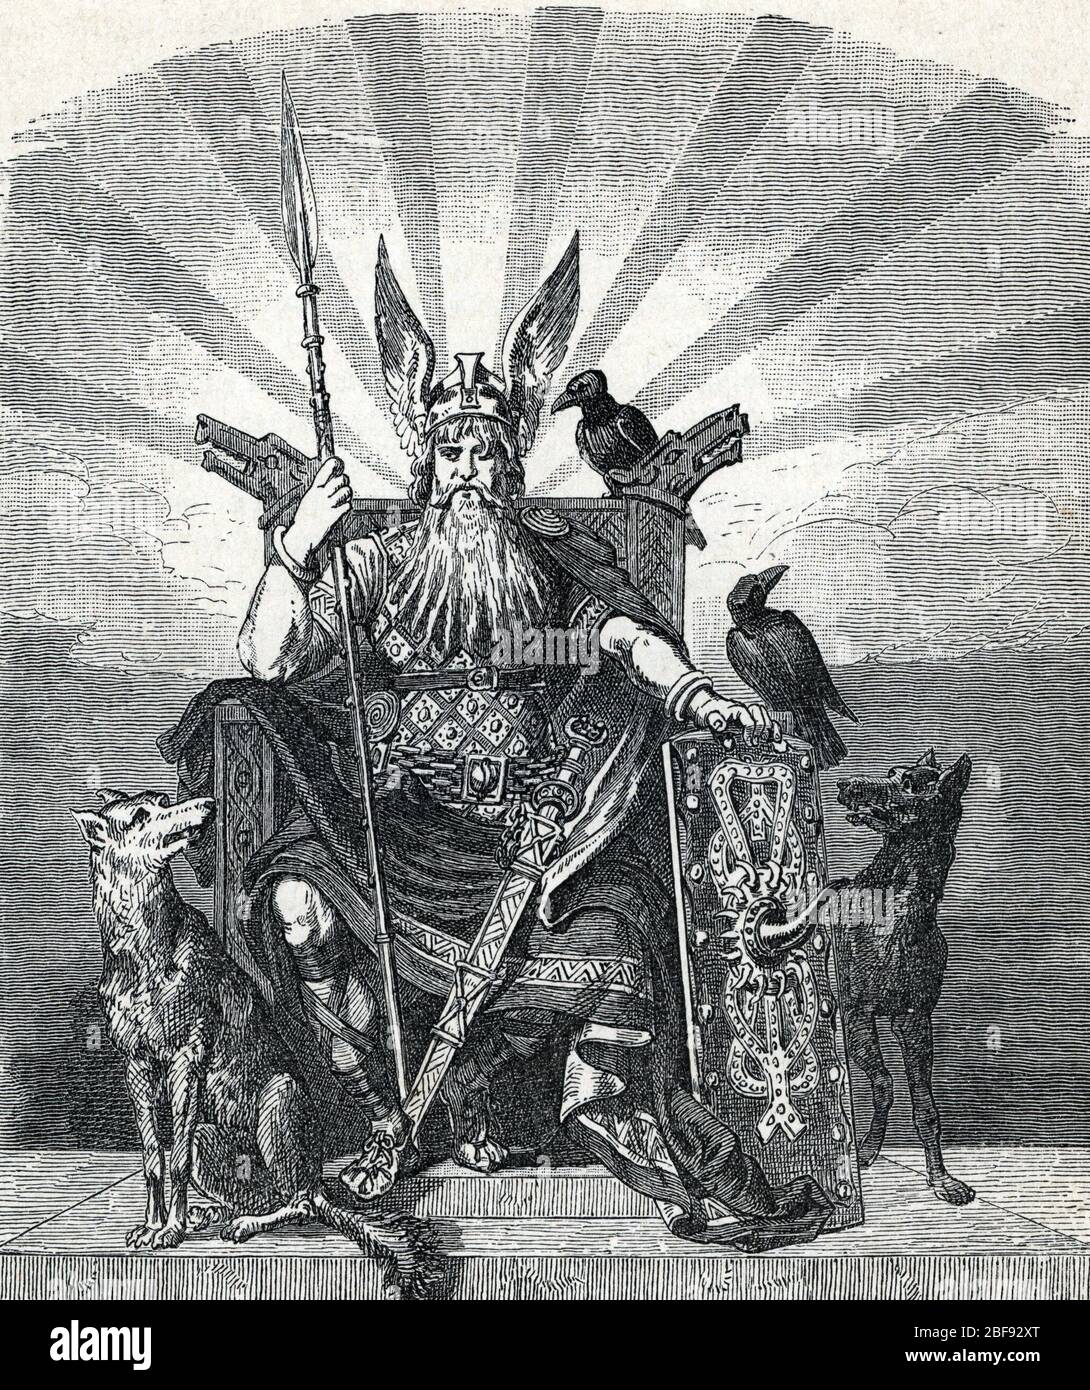 Mythologie nordique : Odin (Norse mythology : Odin) Gravure tiree de 'Nordisch-germanische Gotter und Helden' de Wilhelm wagner 1901 Collection privee Stock Photo